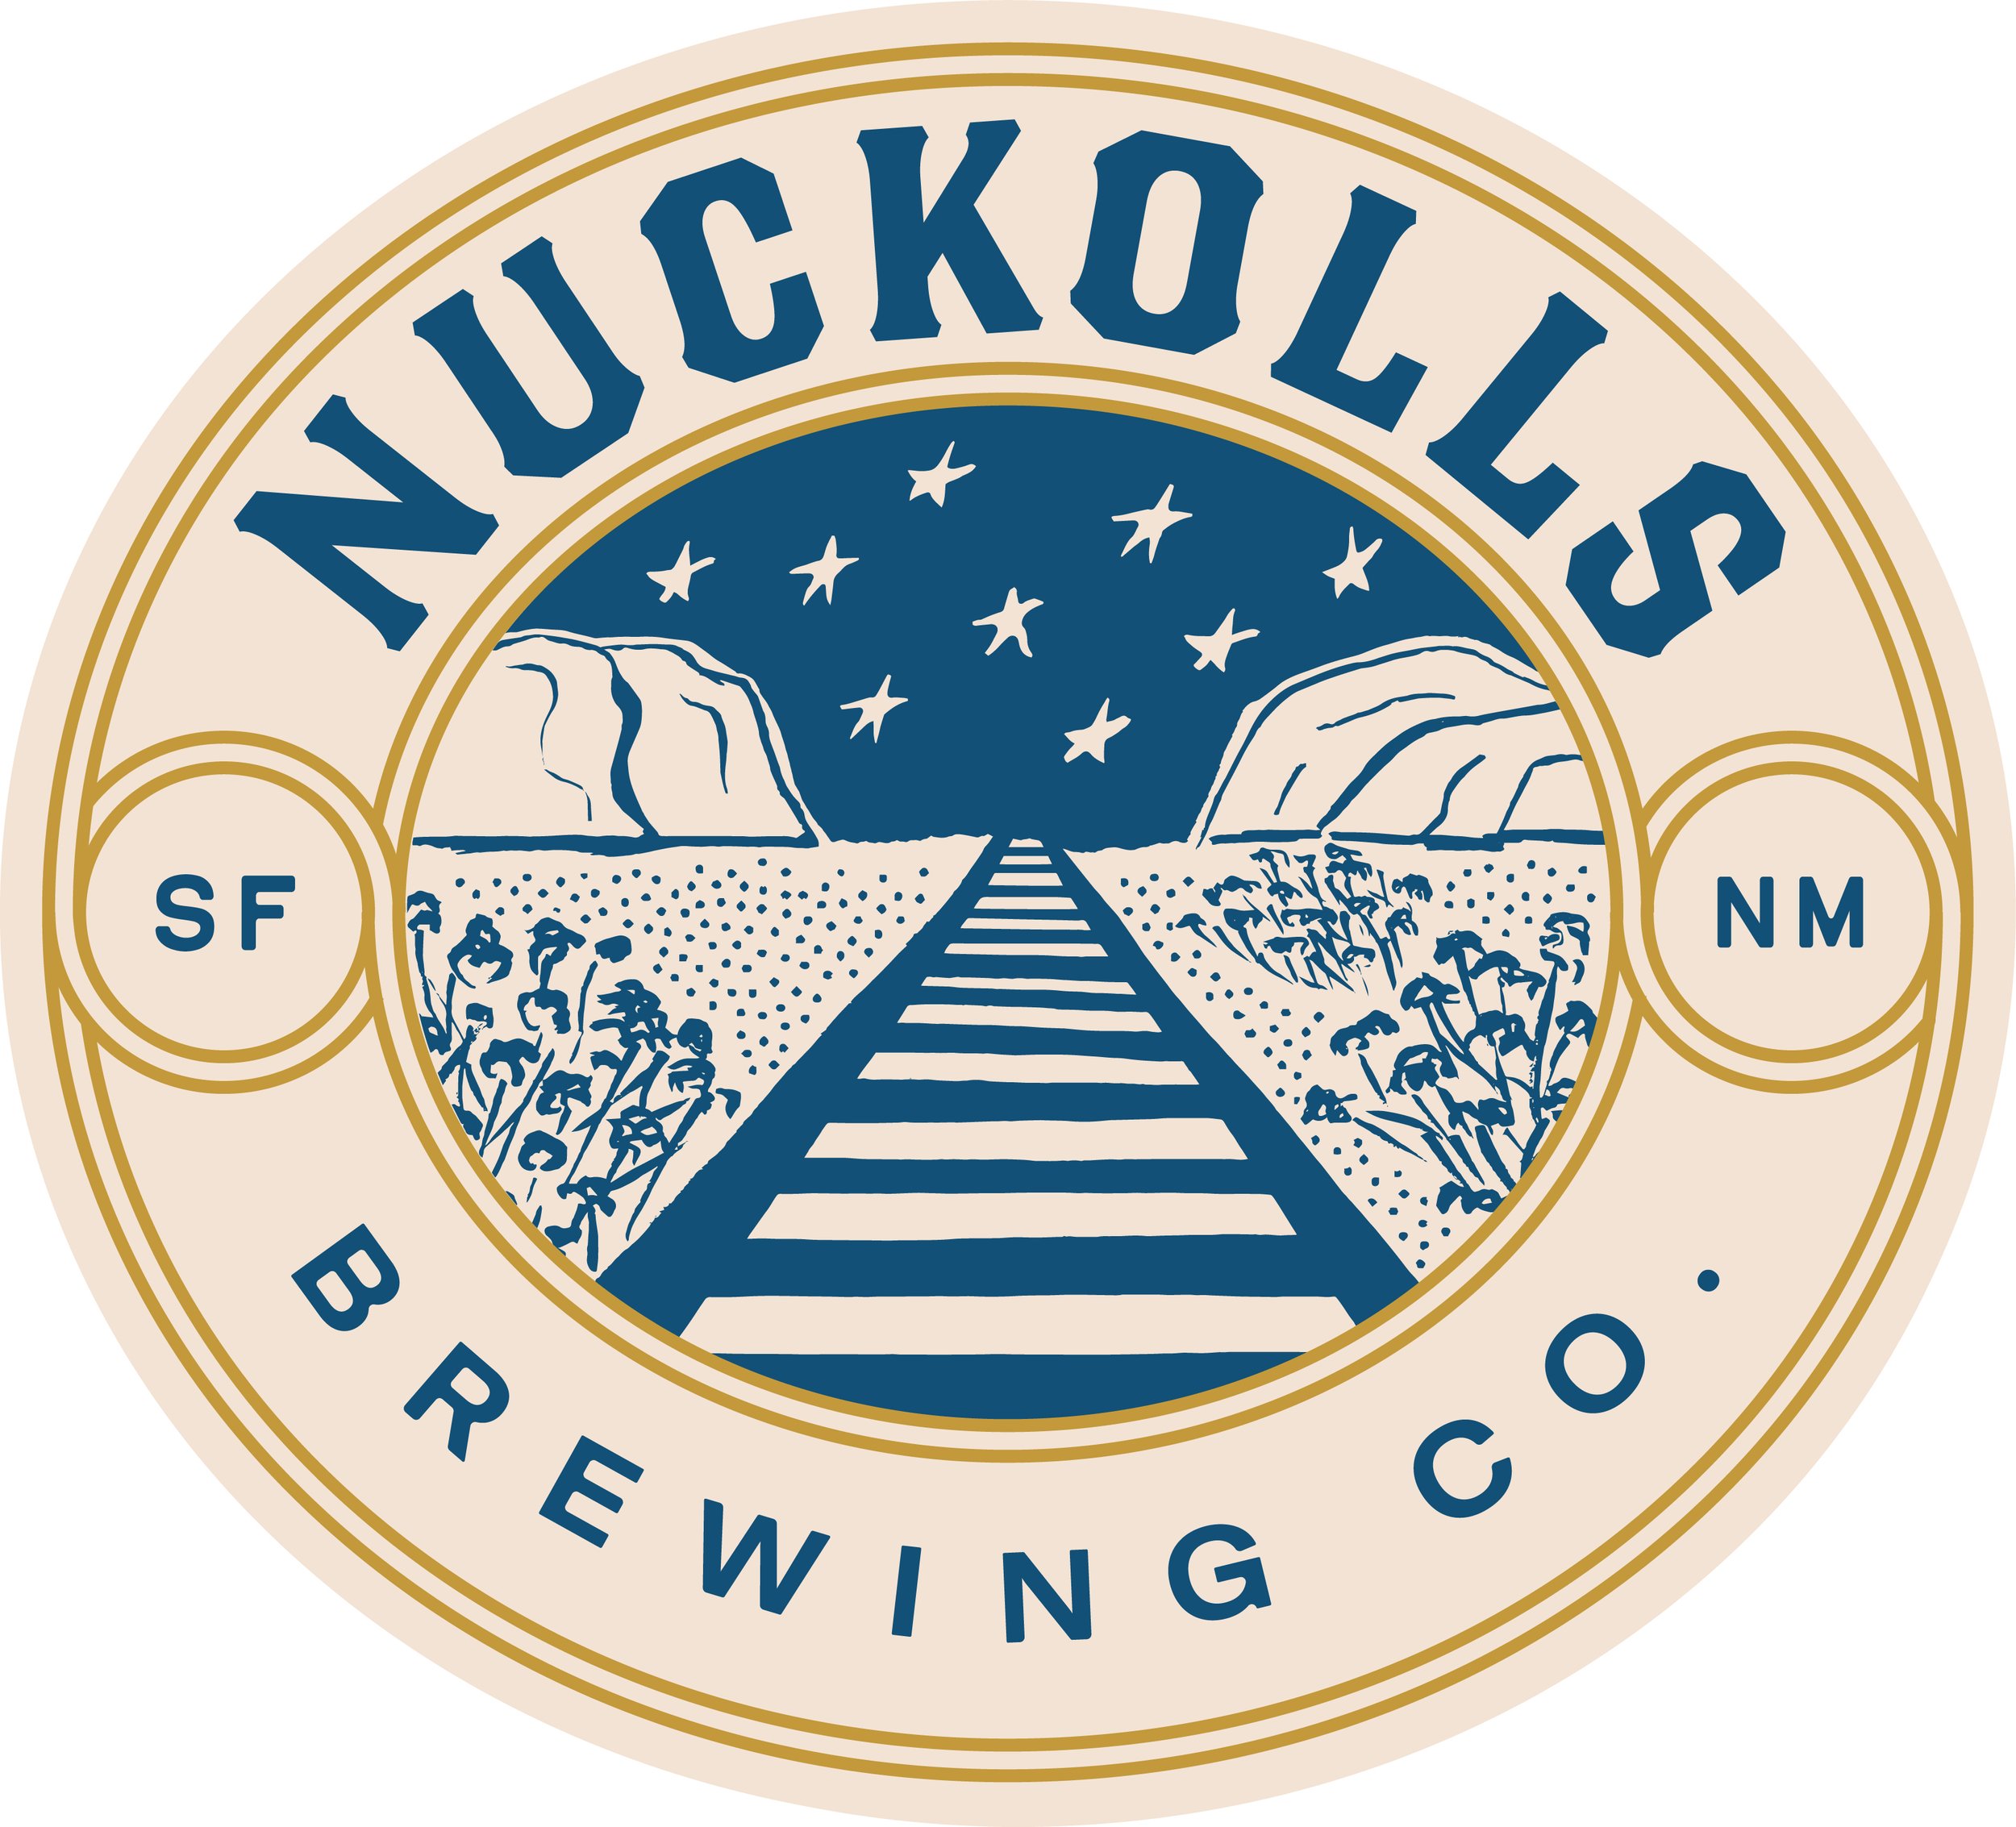 Nuckols Brewing Co